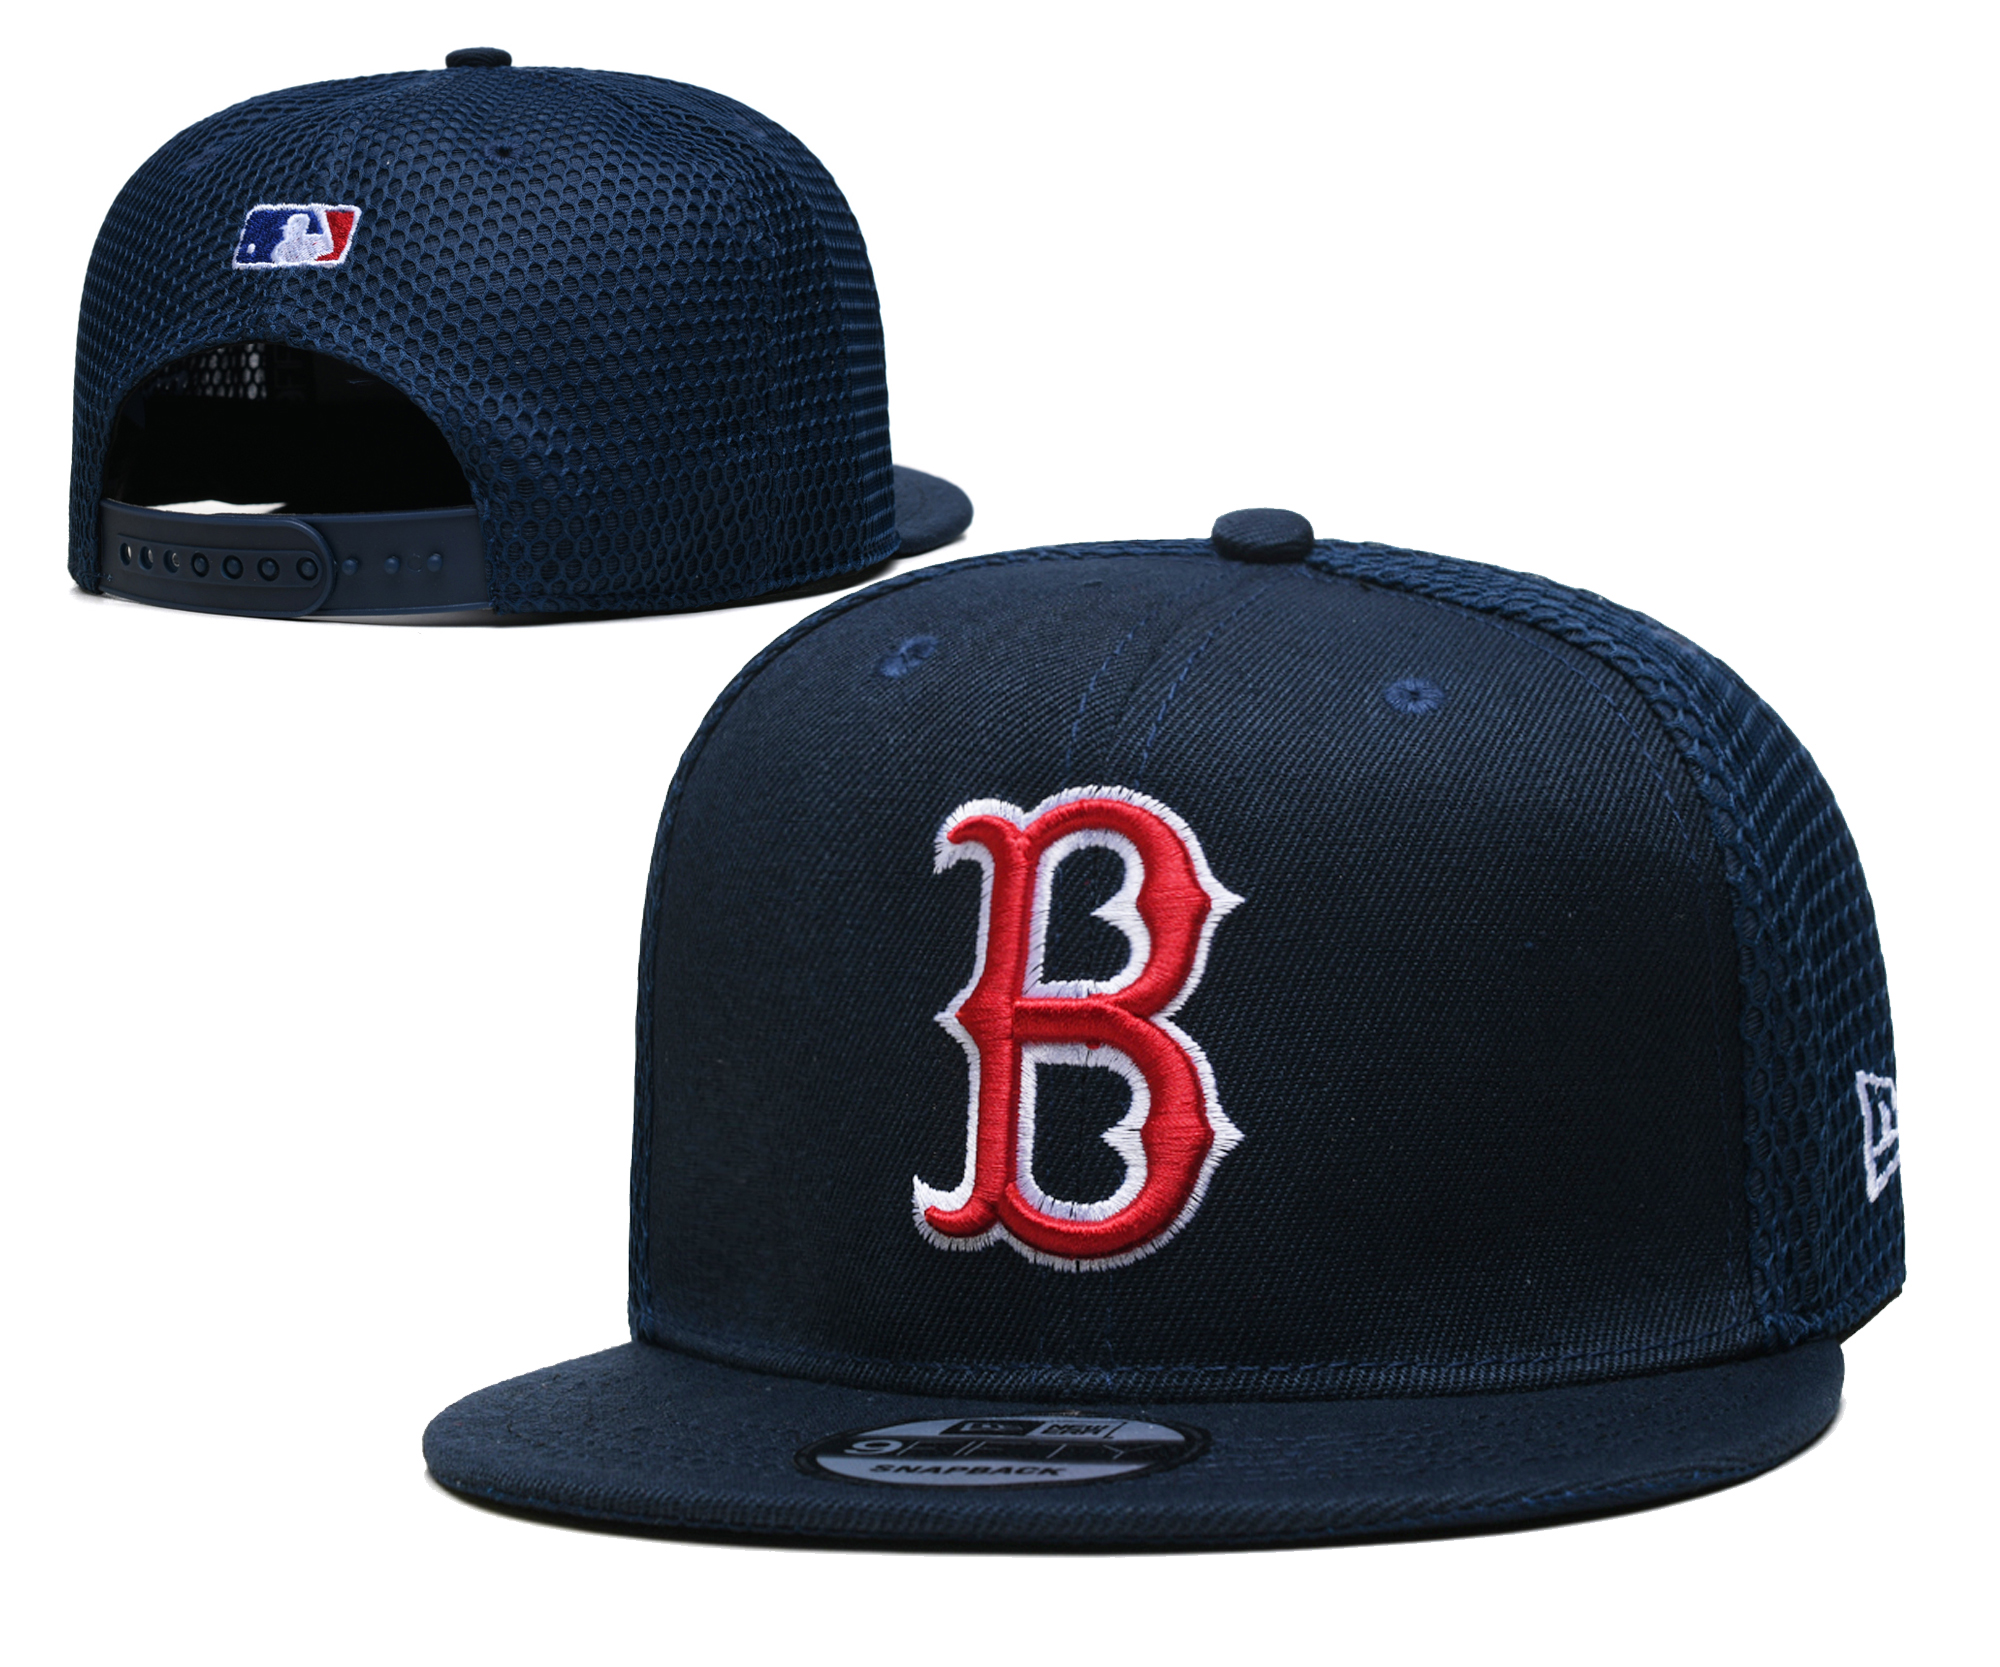 Cheap 2021 MLB Boston Red Sox 13 TX hat